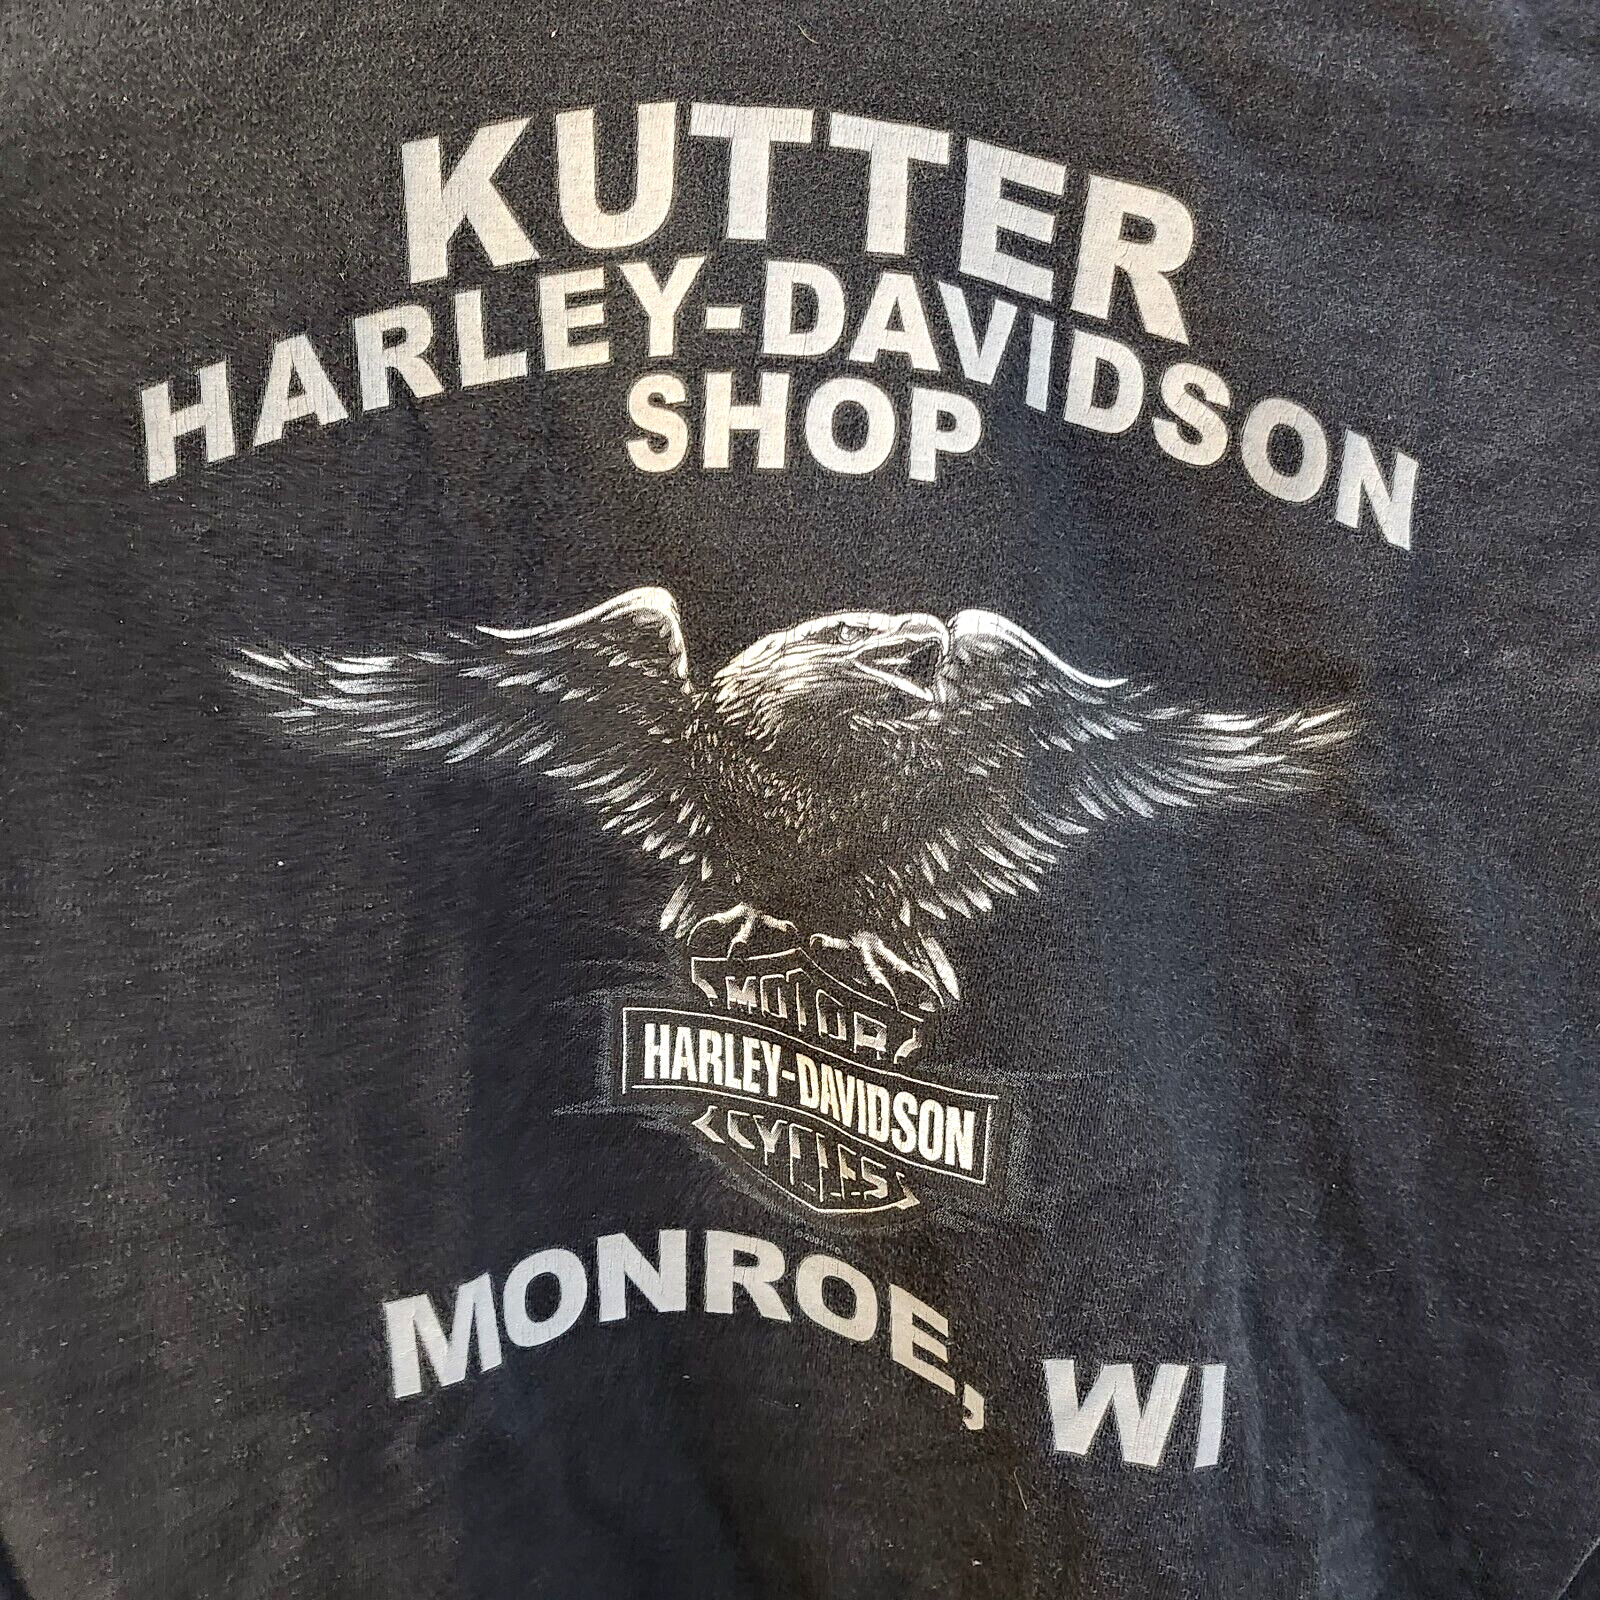 Harley Davidson T-shirt KUTTER Monroe WI Size XL Black